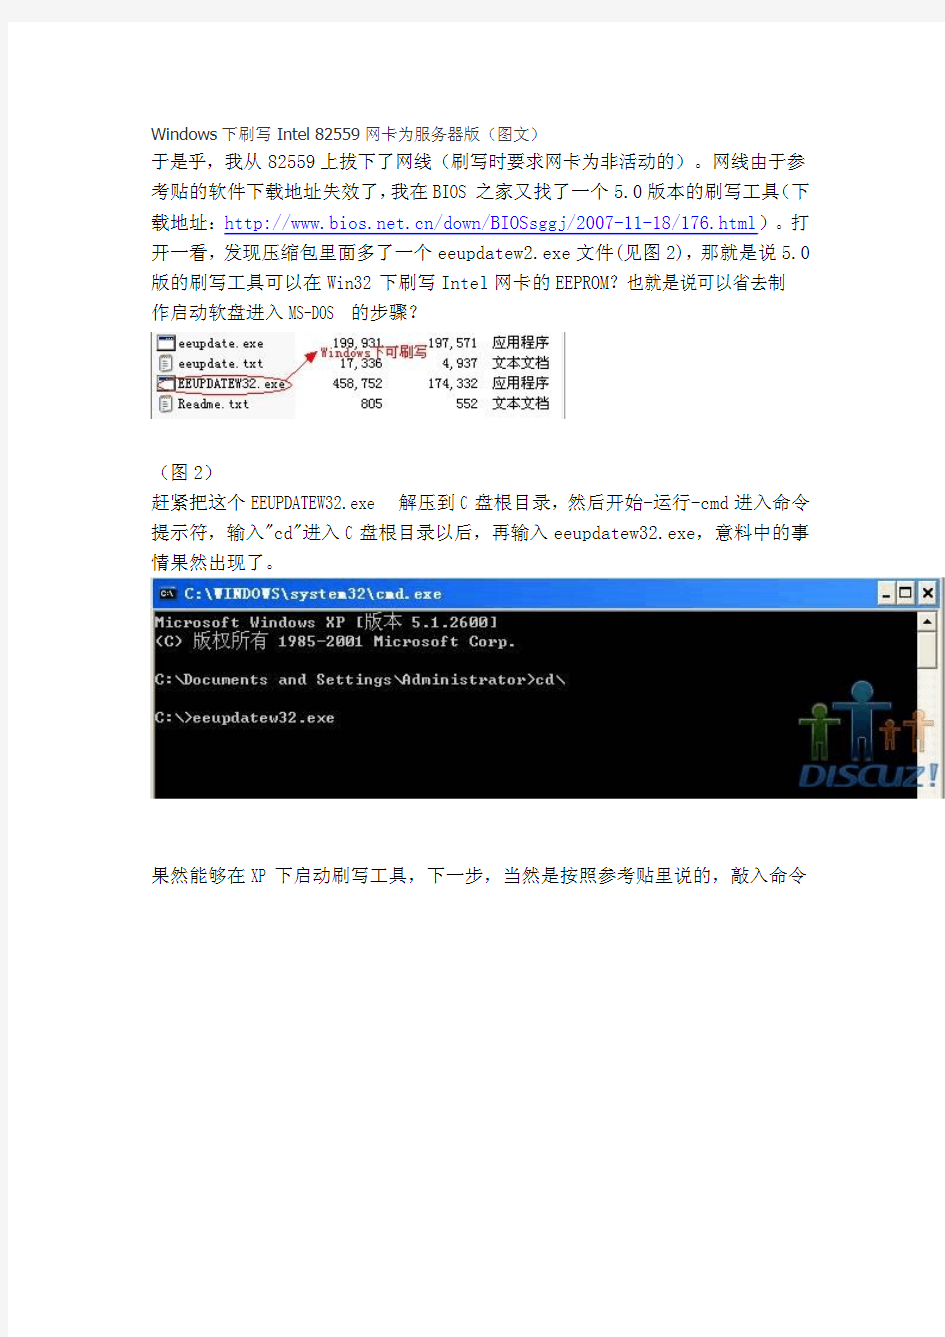 Windows下刷写Intel 82559网卡为服务器版